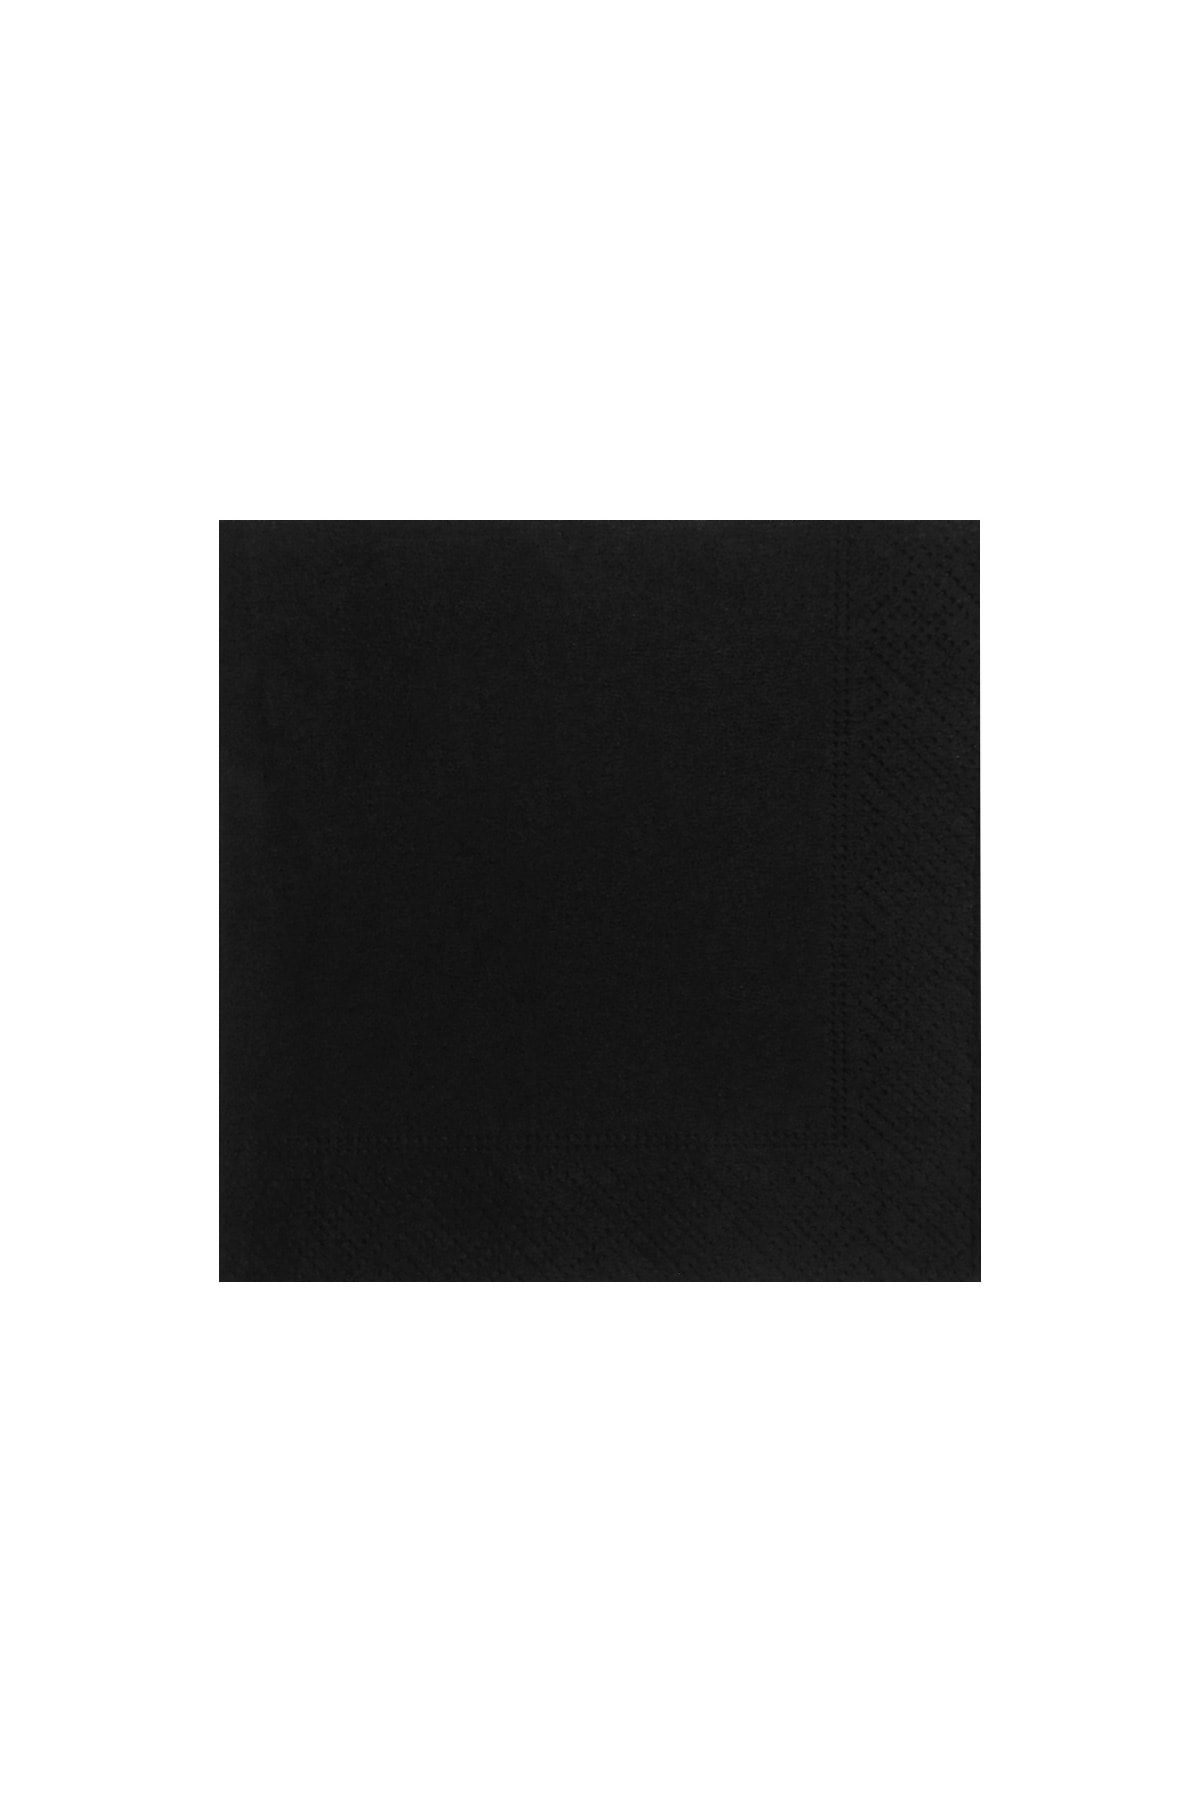 Story 24 X 24 cm 2 Katlı 100'lü Kenar Desenli Kare Siyah Renkli Kağıt Peçete